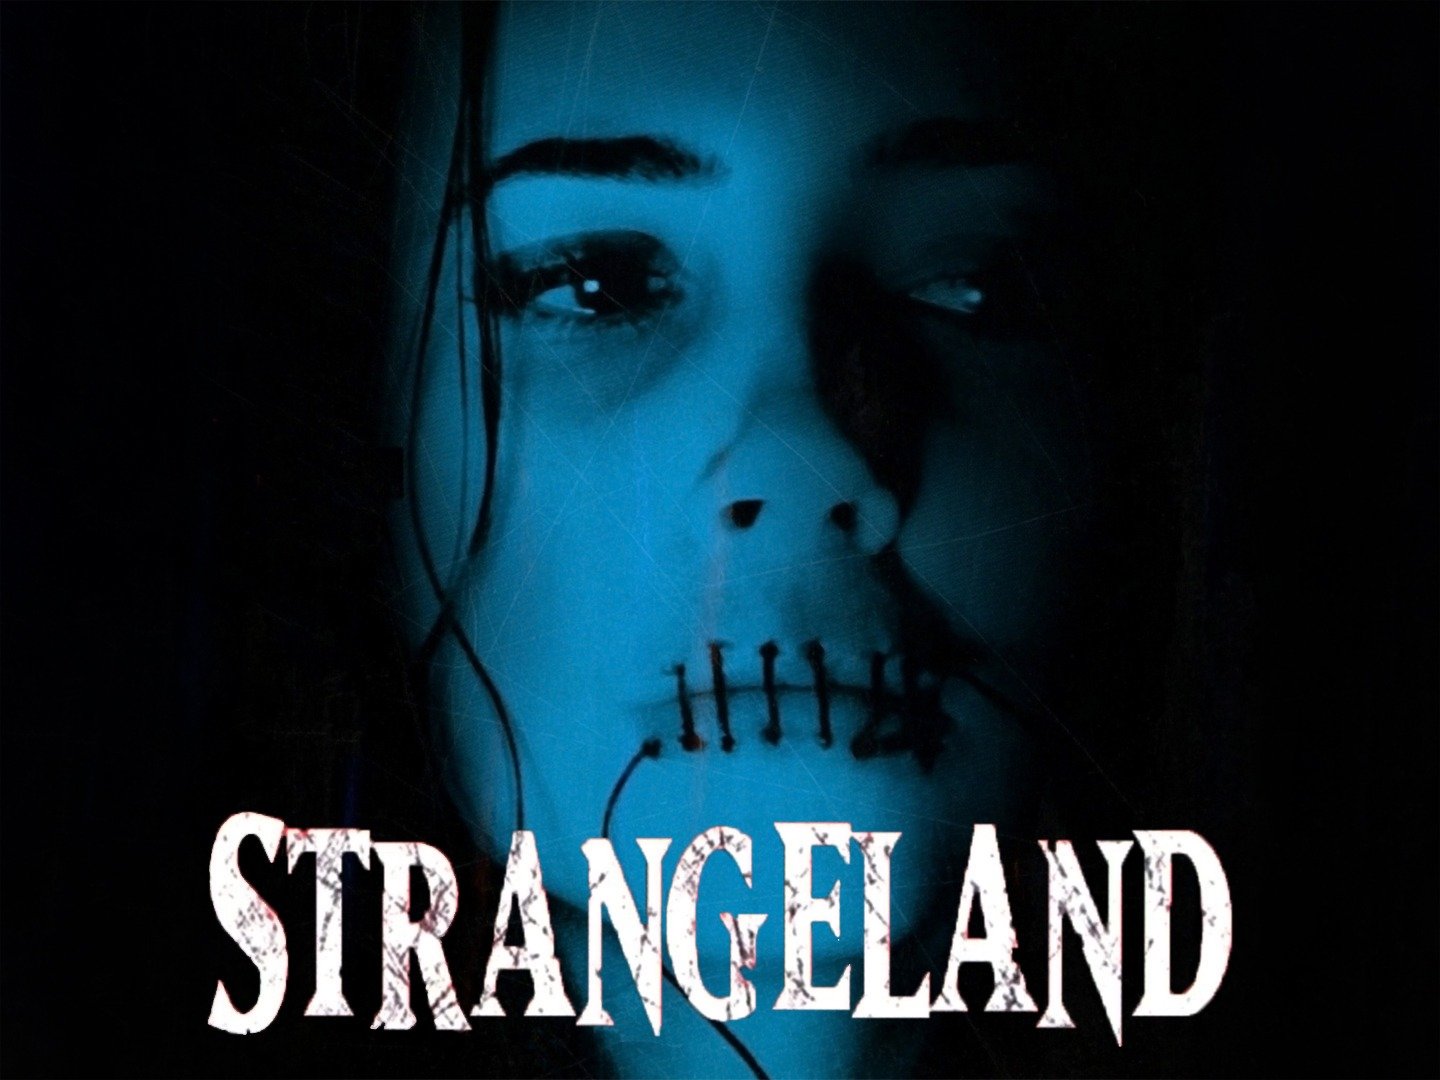 strangeland full movie free online